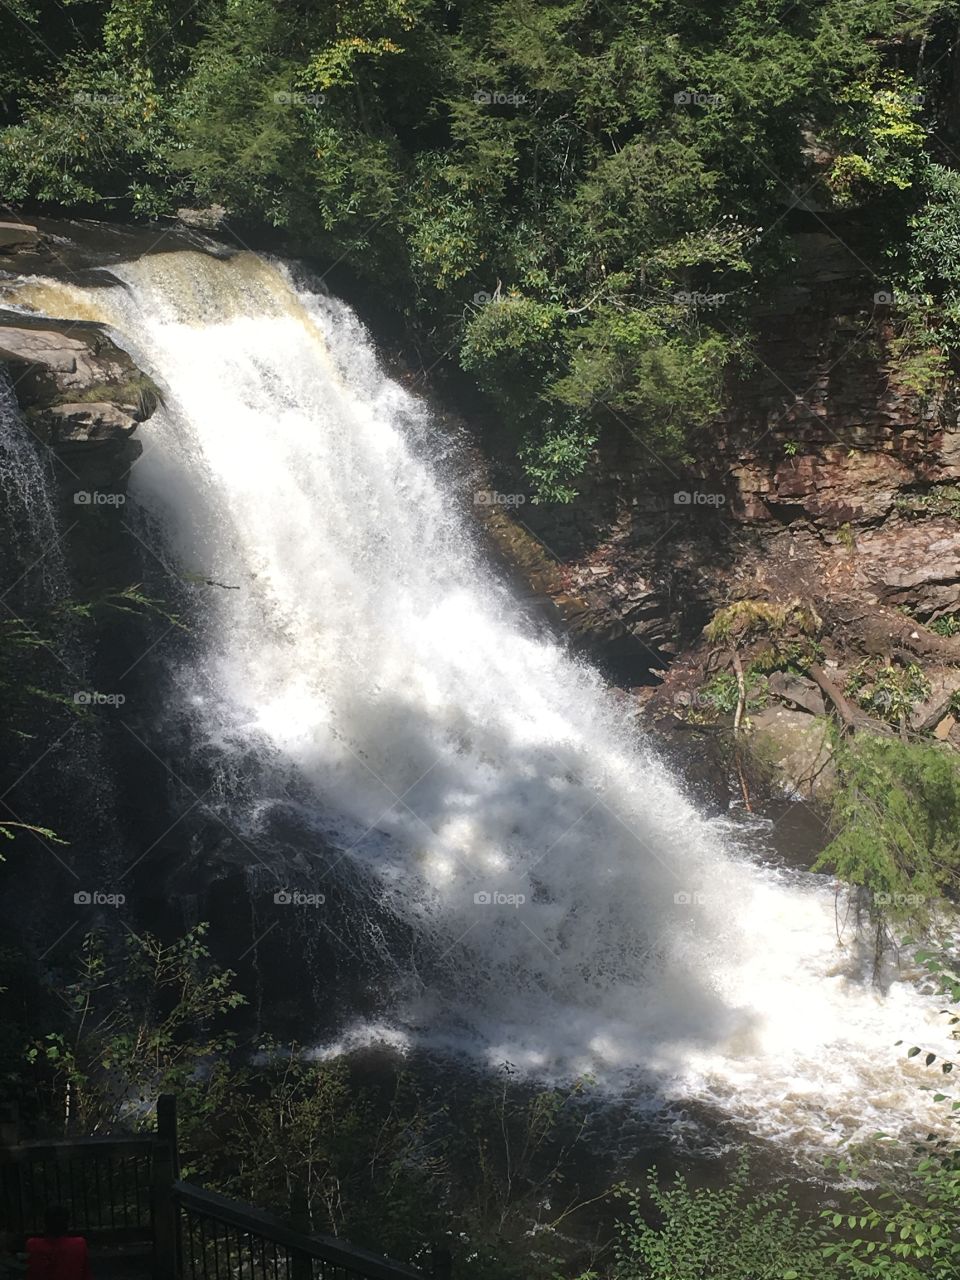 Muddy Creek Falls at Swallow Falls State Park in Western Maryland Mountsins